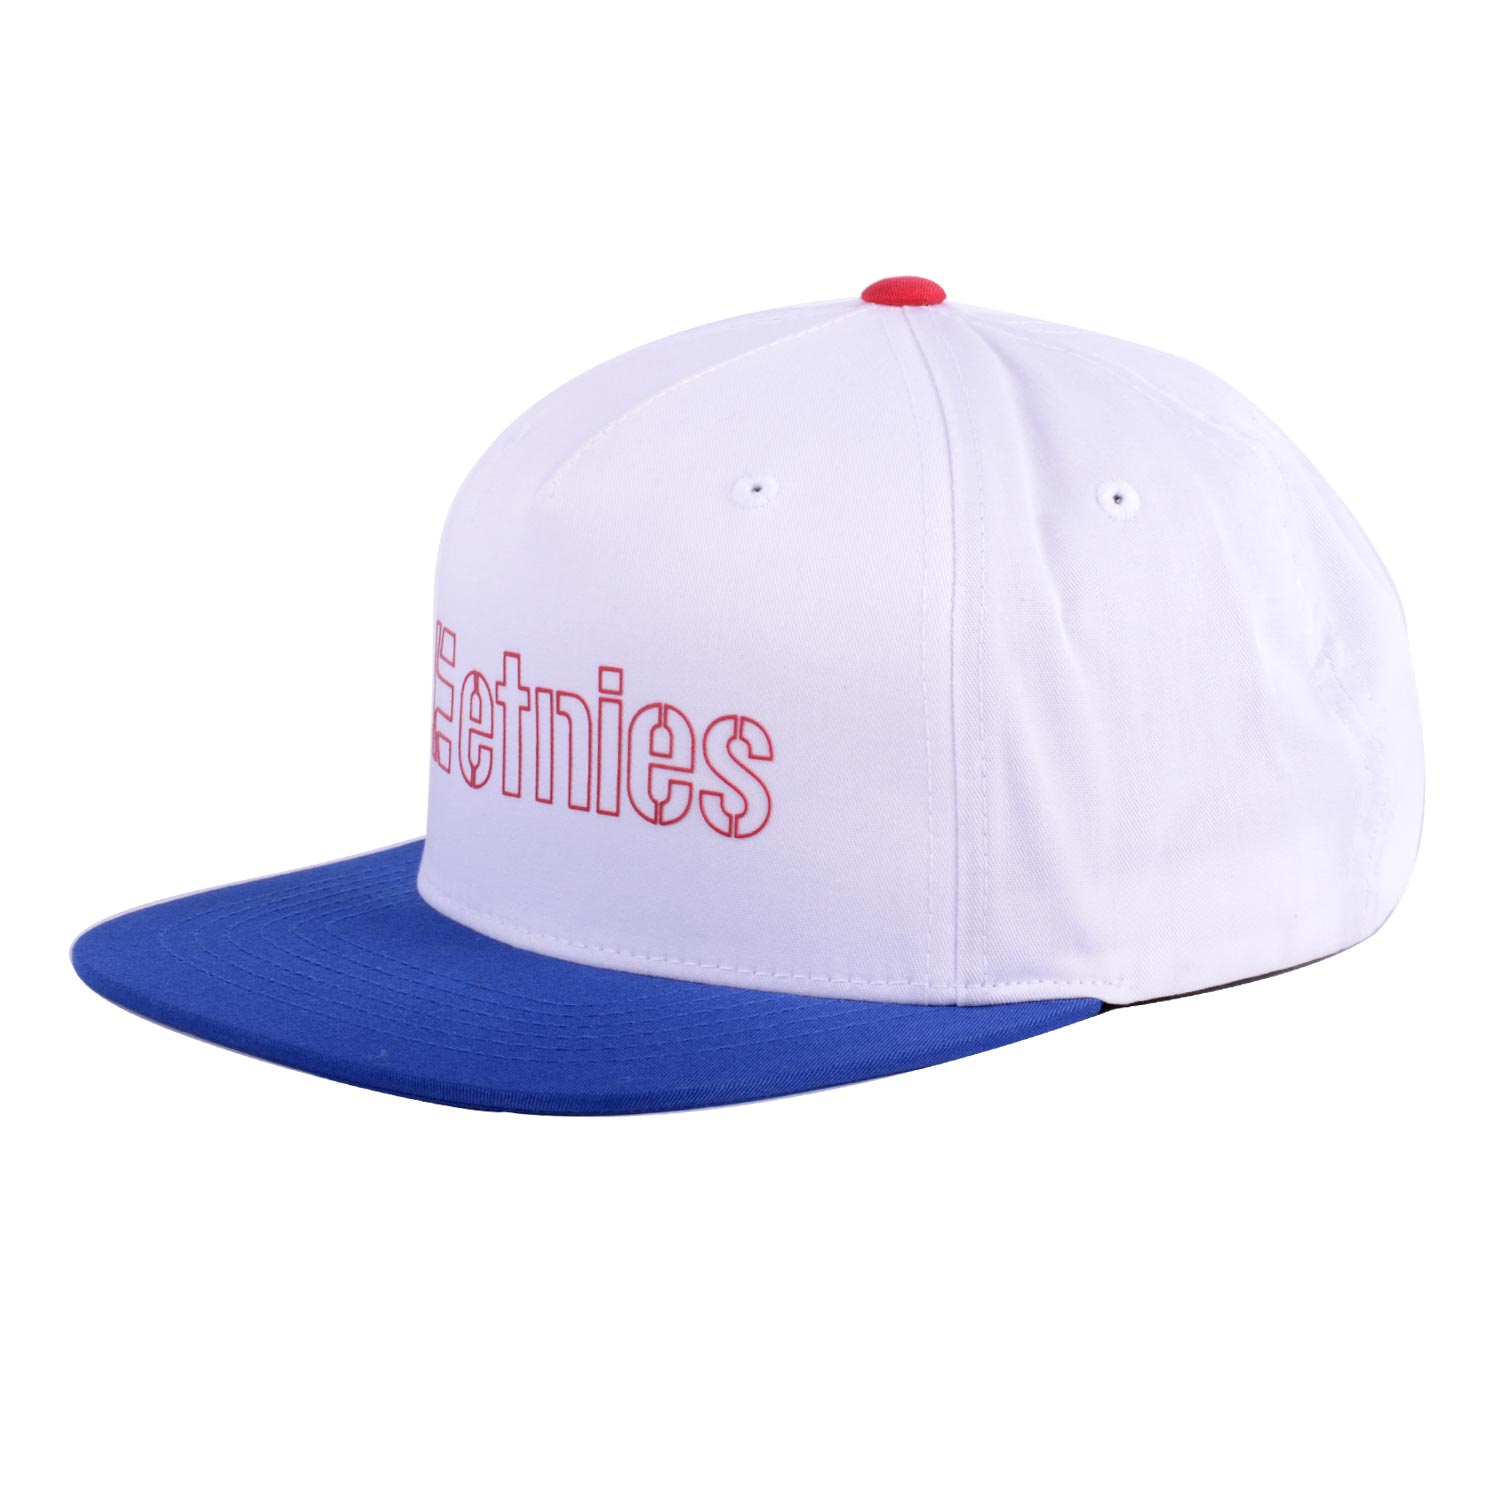 Etnies Corporate 5 Snapback Hat